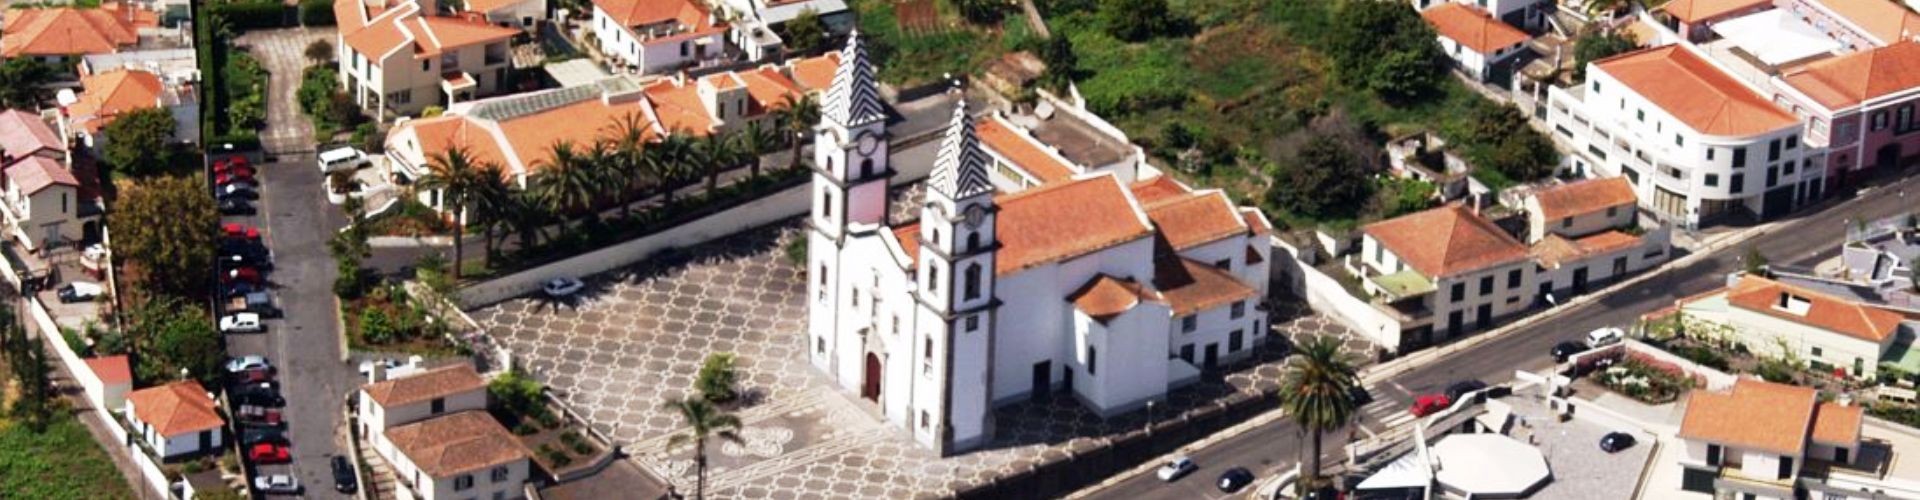 Saint Anthony Church, Funchal, Madeira